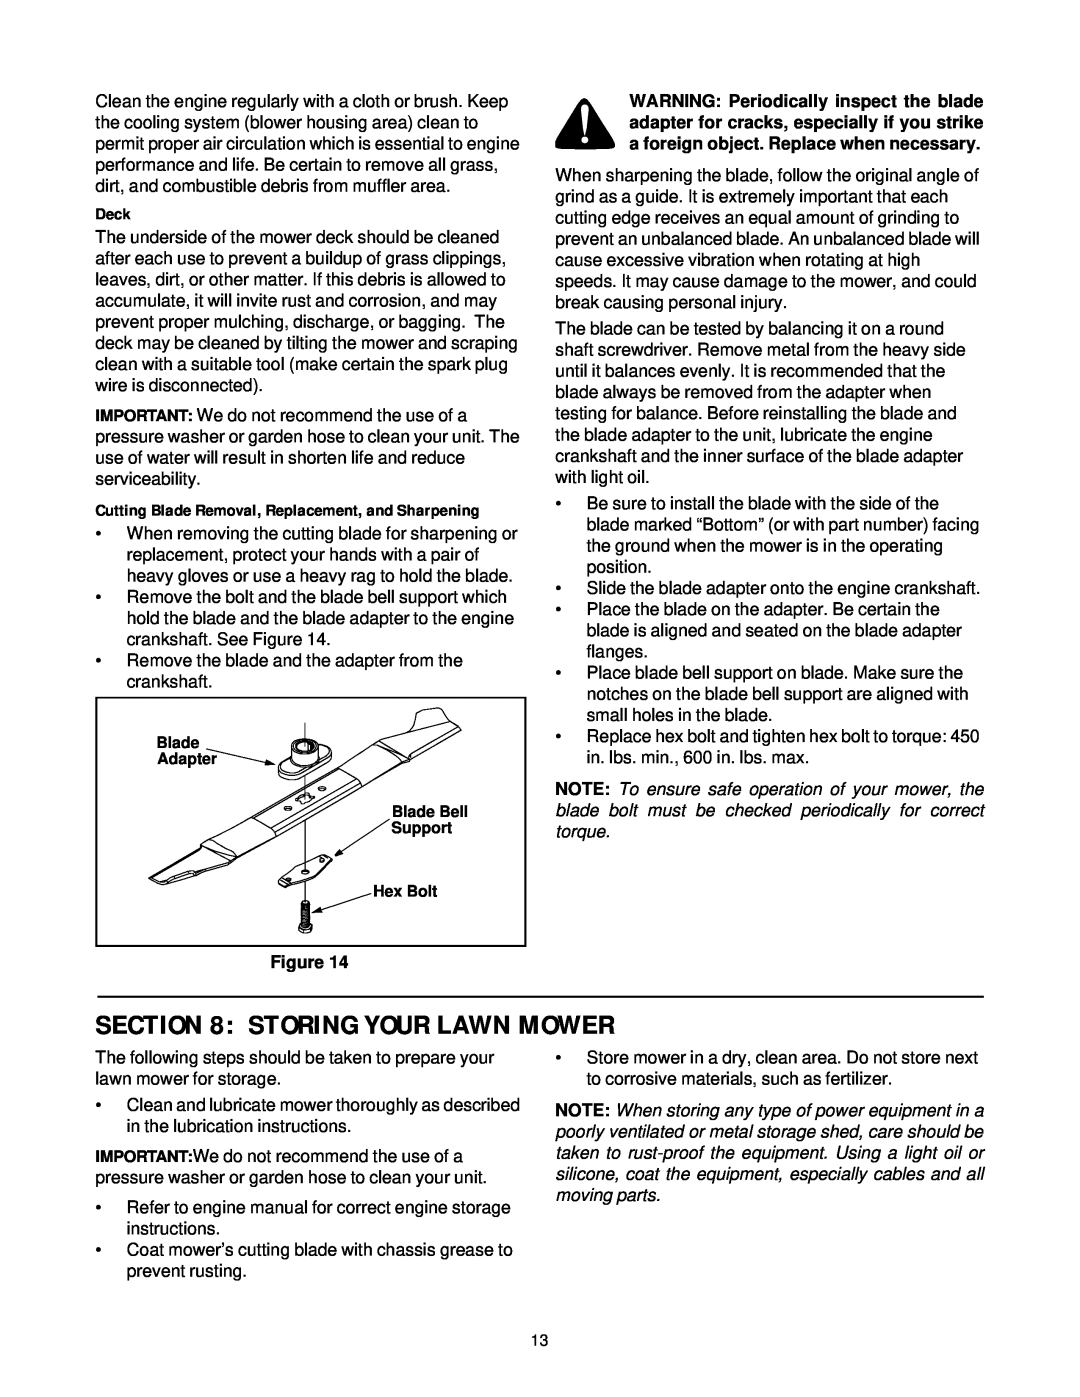 Yard-Man 11A-589C401 manual Storing Your Lawn Mower, Deck 